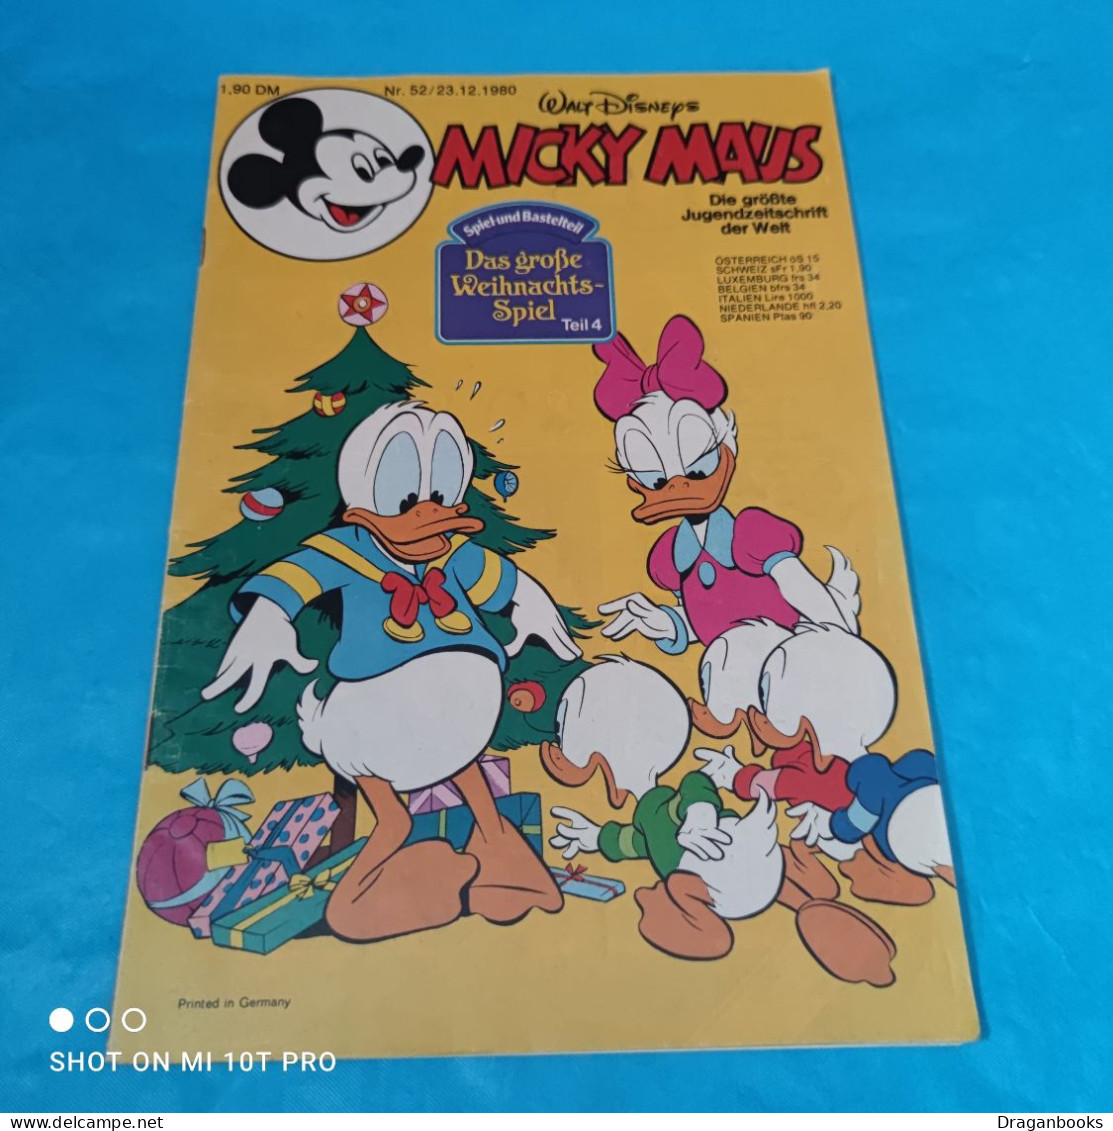 Micky Maus Nr. 52 - 23.12.1980 - Walt Disney